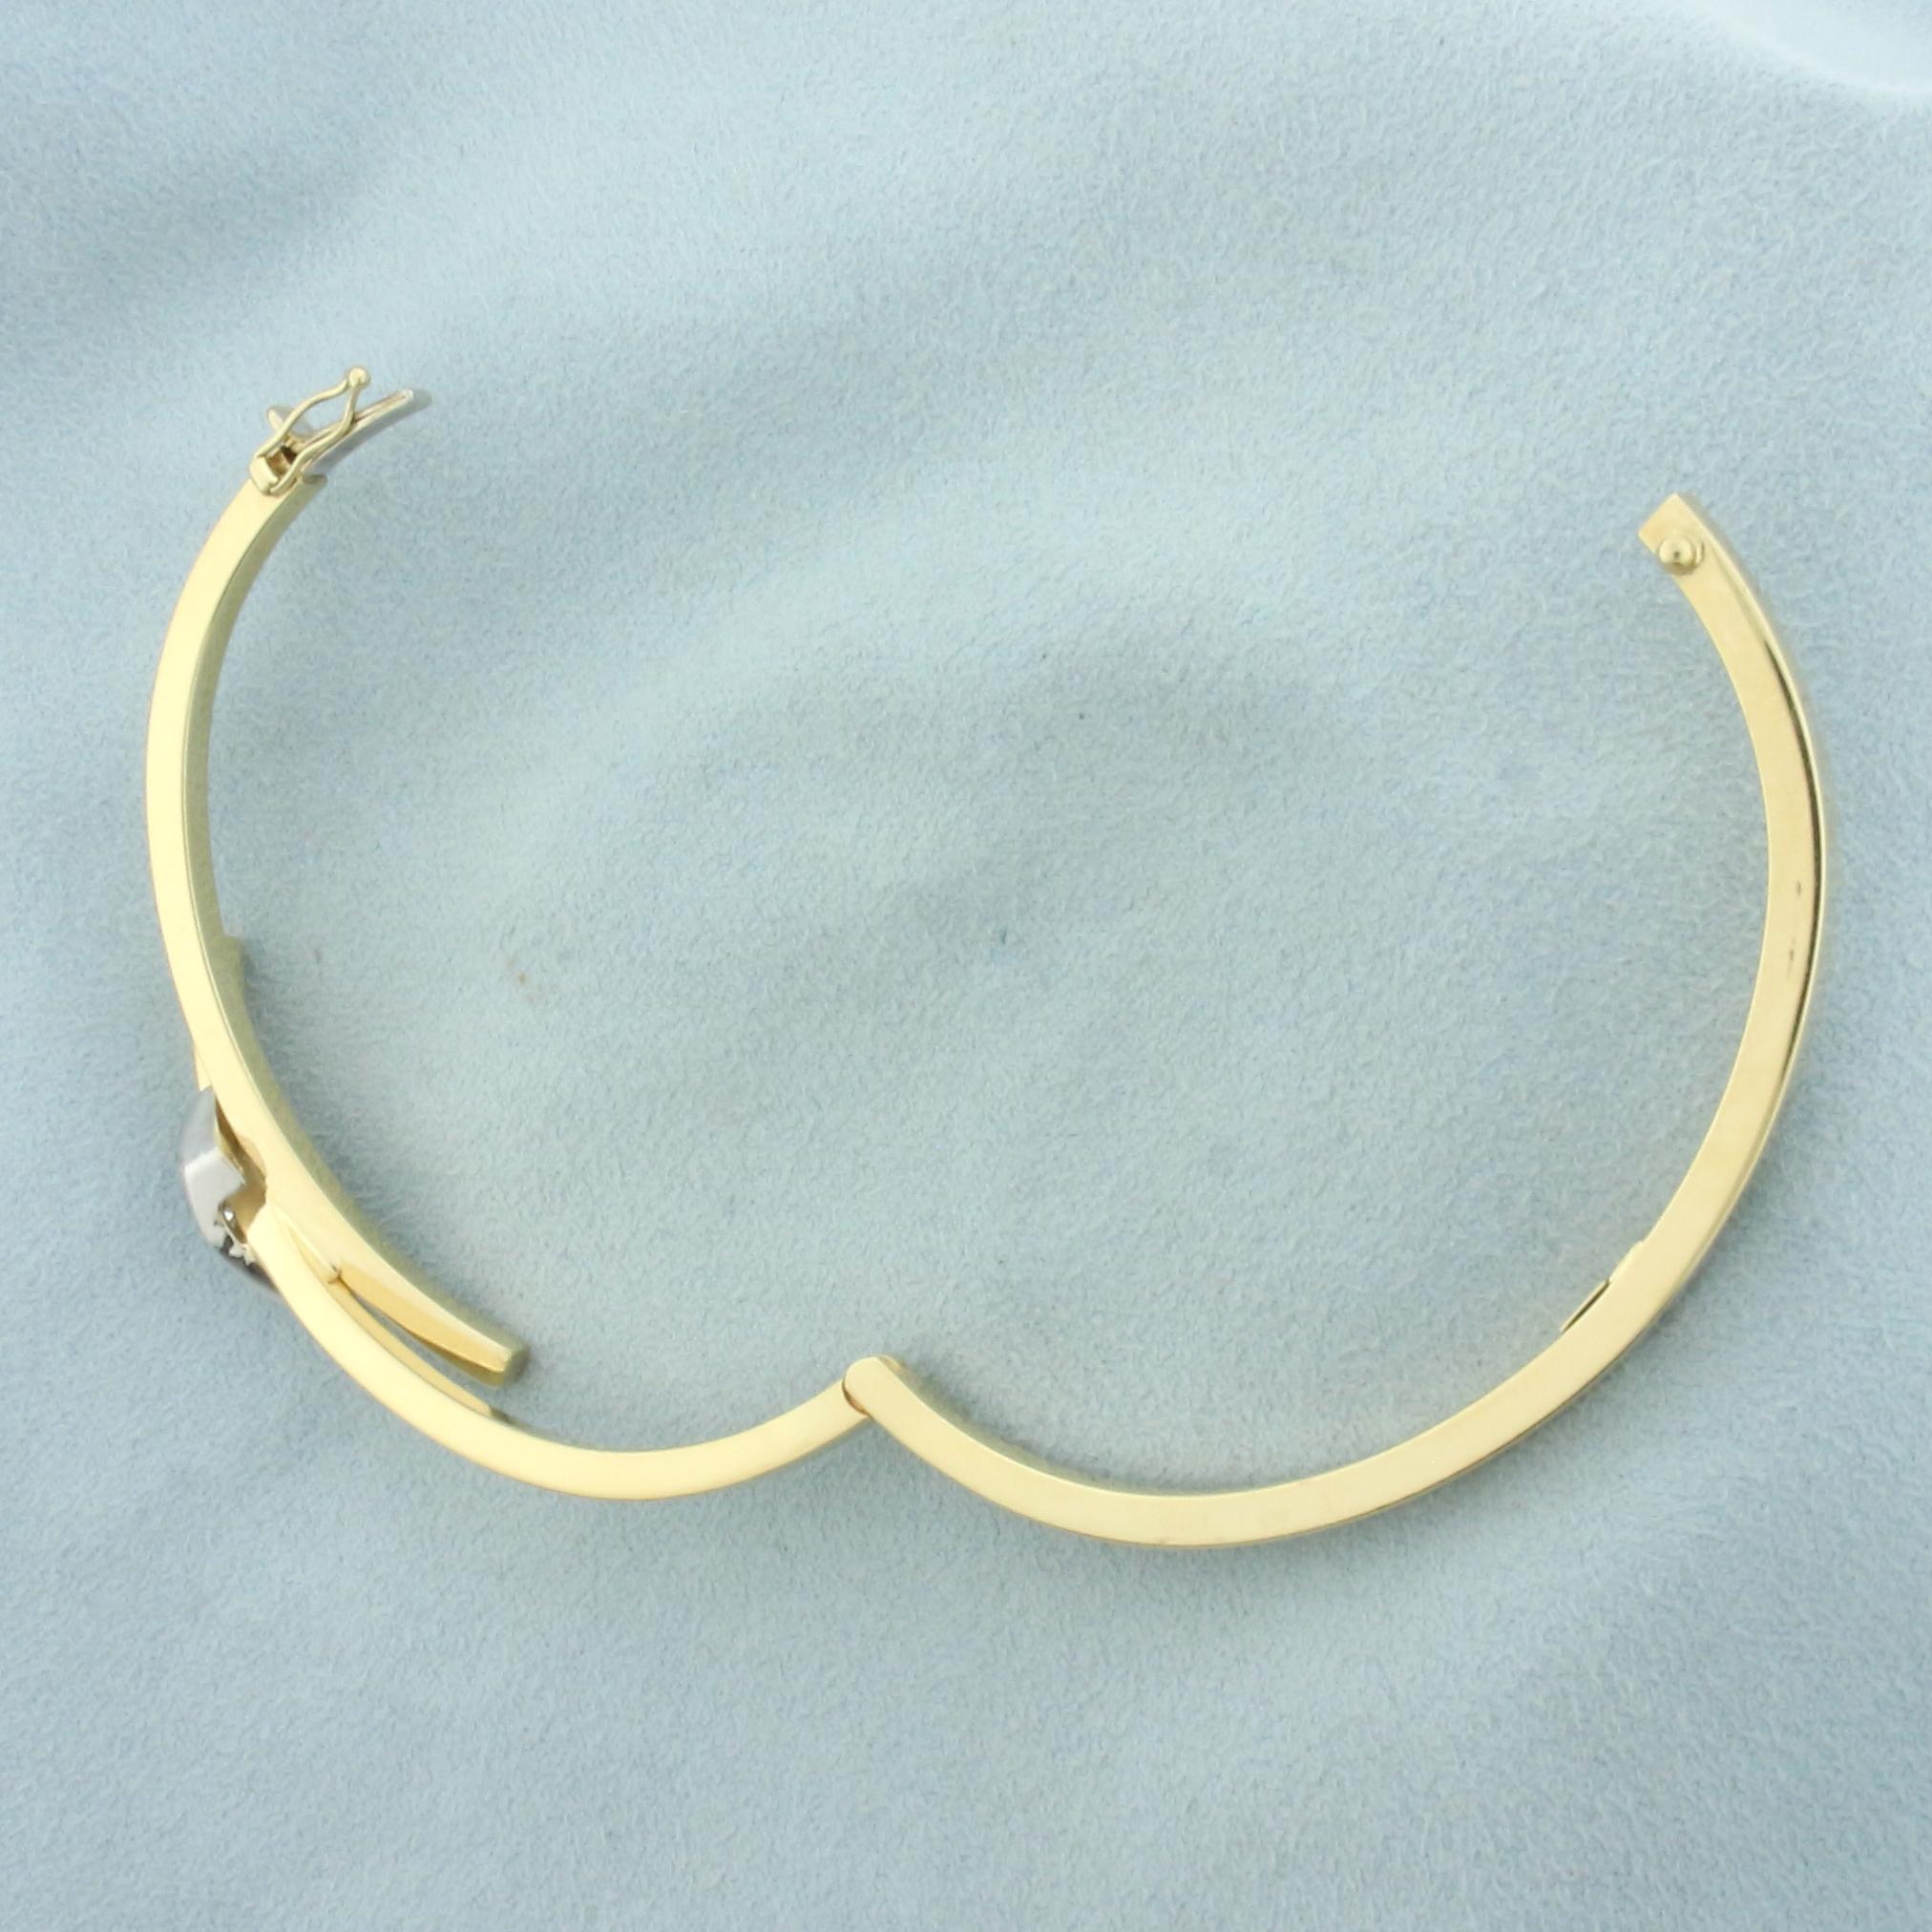 Criss Cross Hinged Bangle Bracelet In 14k Yellow Gold